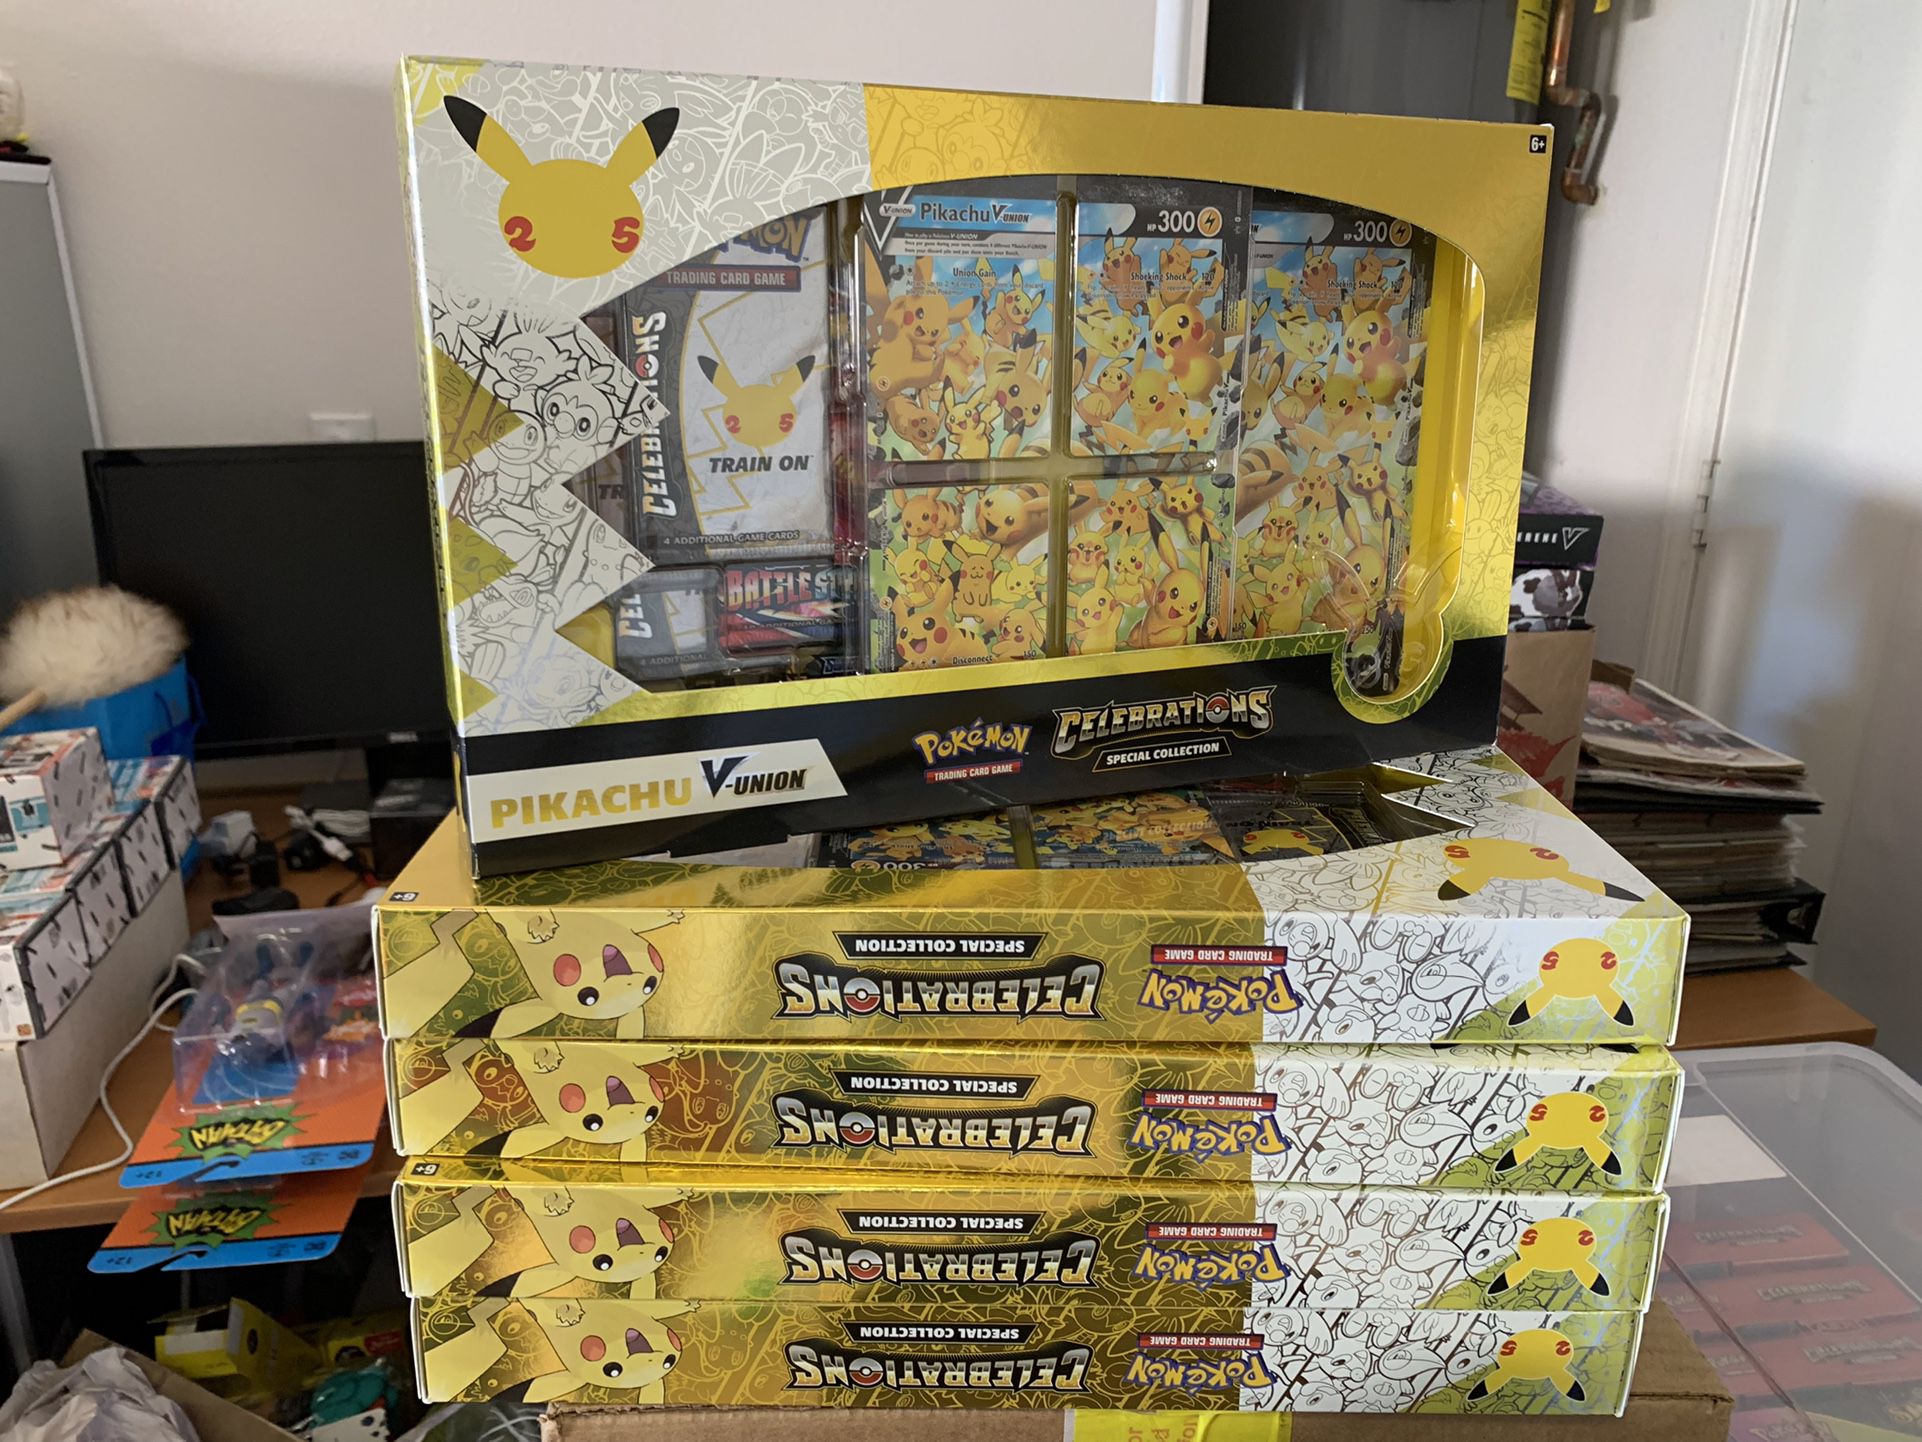 NEW Pokemon Celebrations 25th Anniversary Pikachu V-Union Box -5 Boxes 